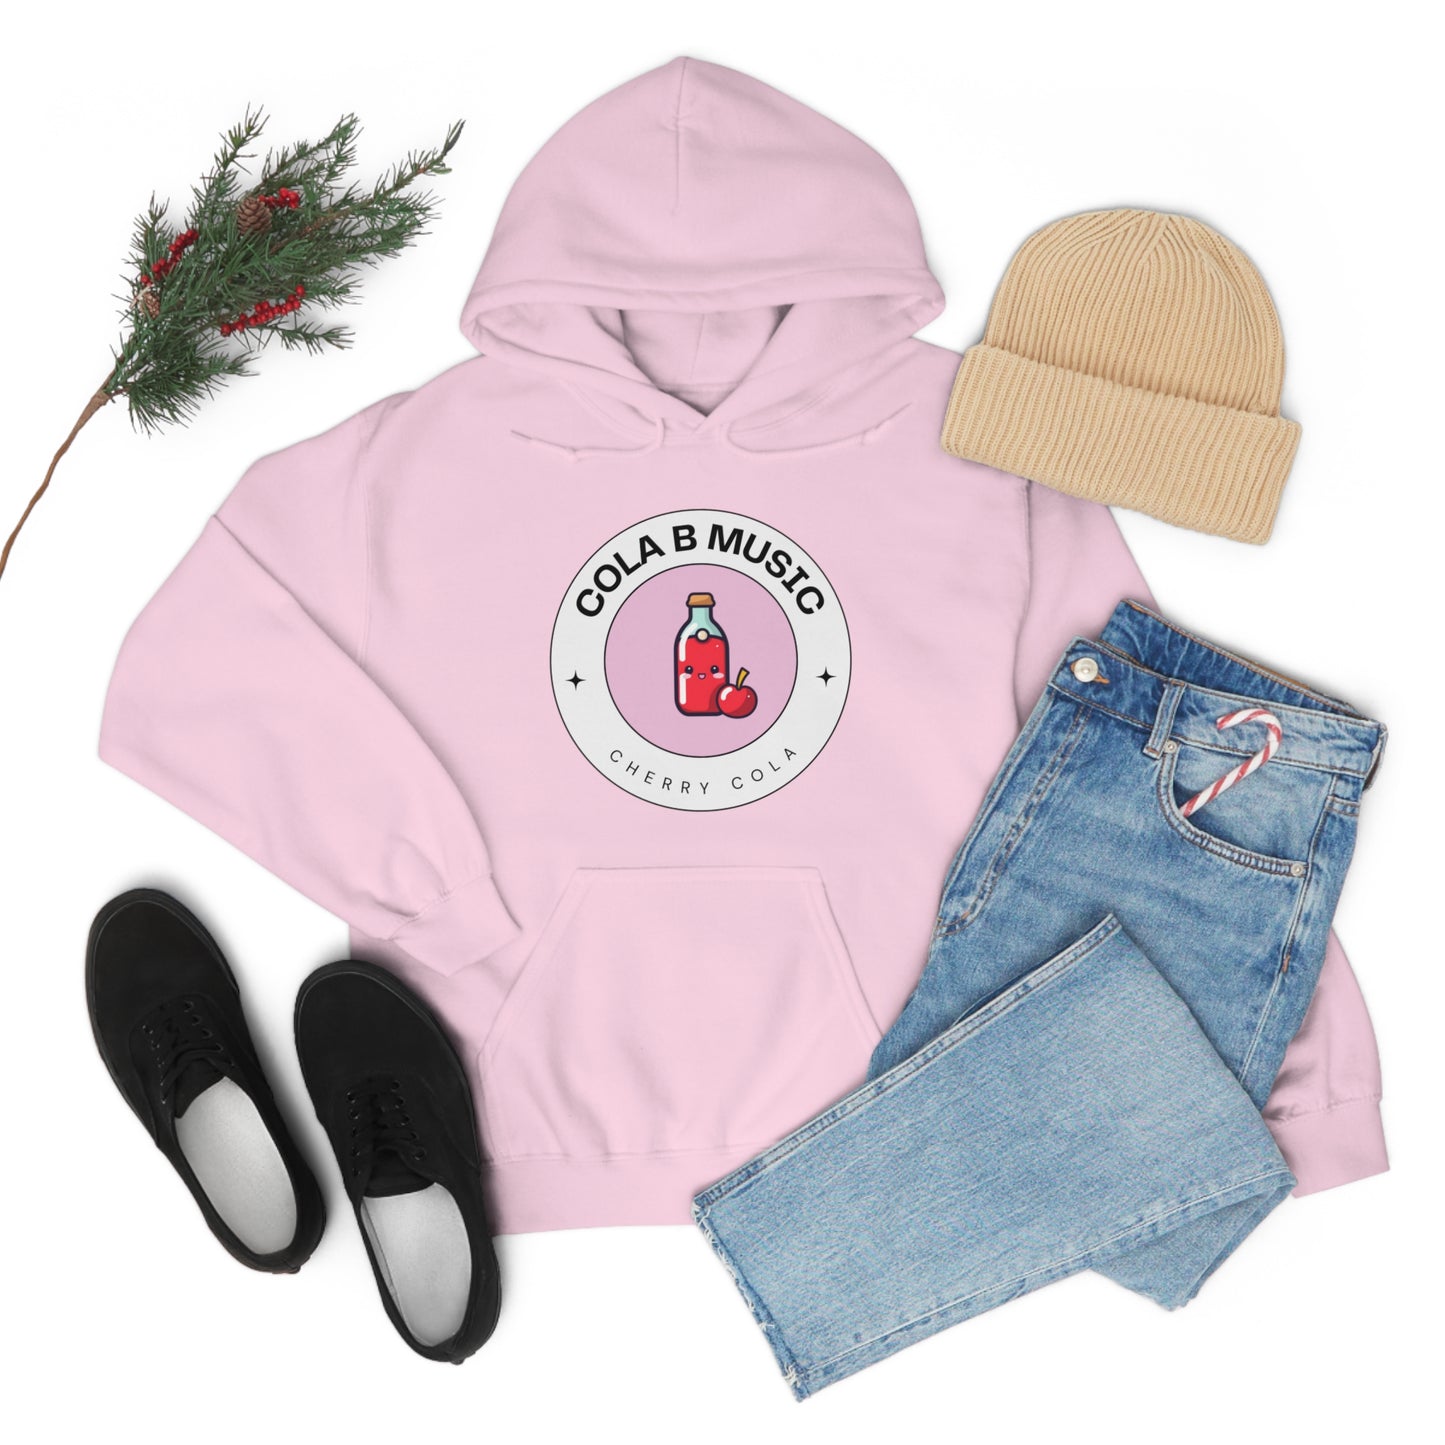 - Cherry Cola Cutie Hooded Sweatshirt